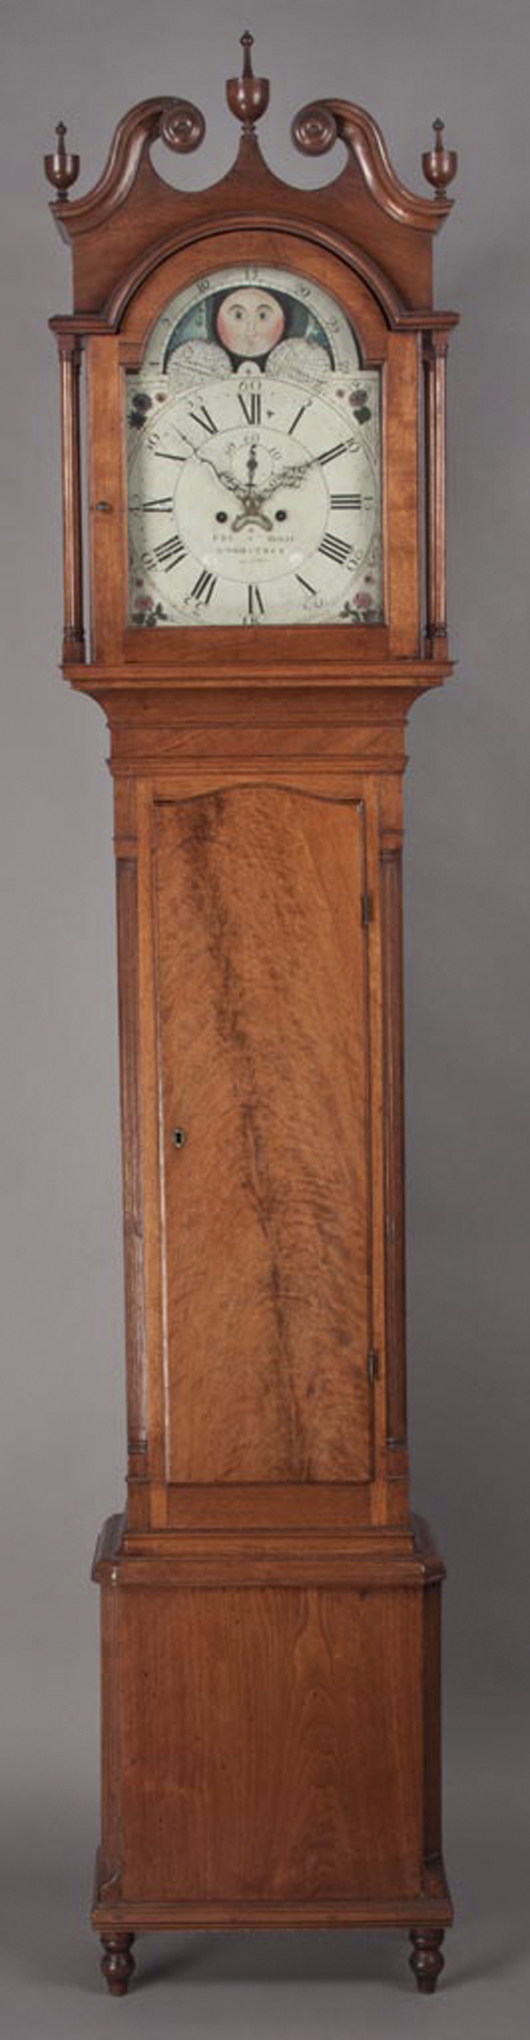 Rare signed Fry and Davis, Woodstock, Va., walnut tall-case clock. Estimate: $15,000-$25,000. Jeffrey S. Evans & Associates image.